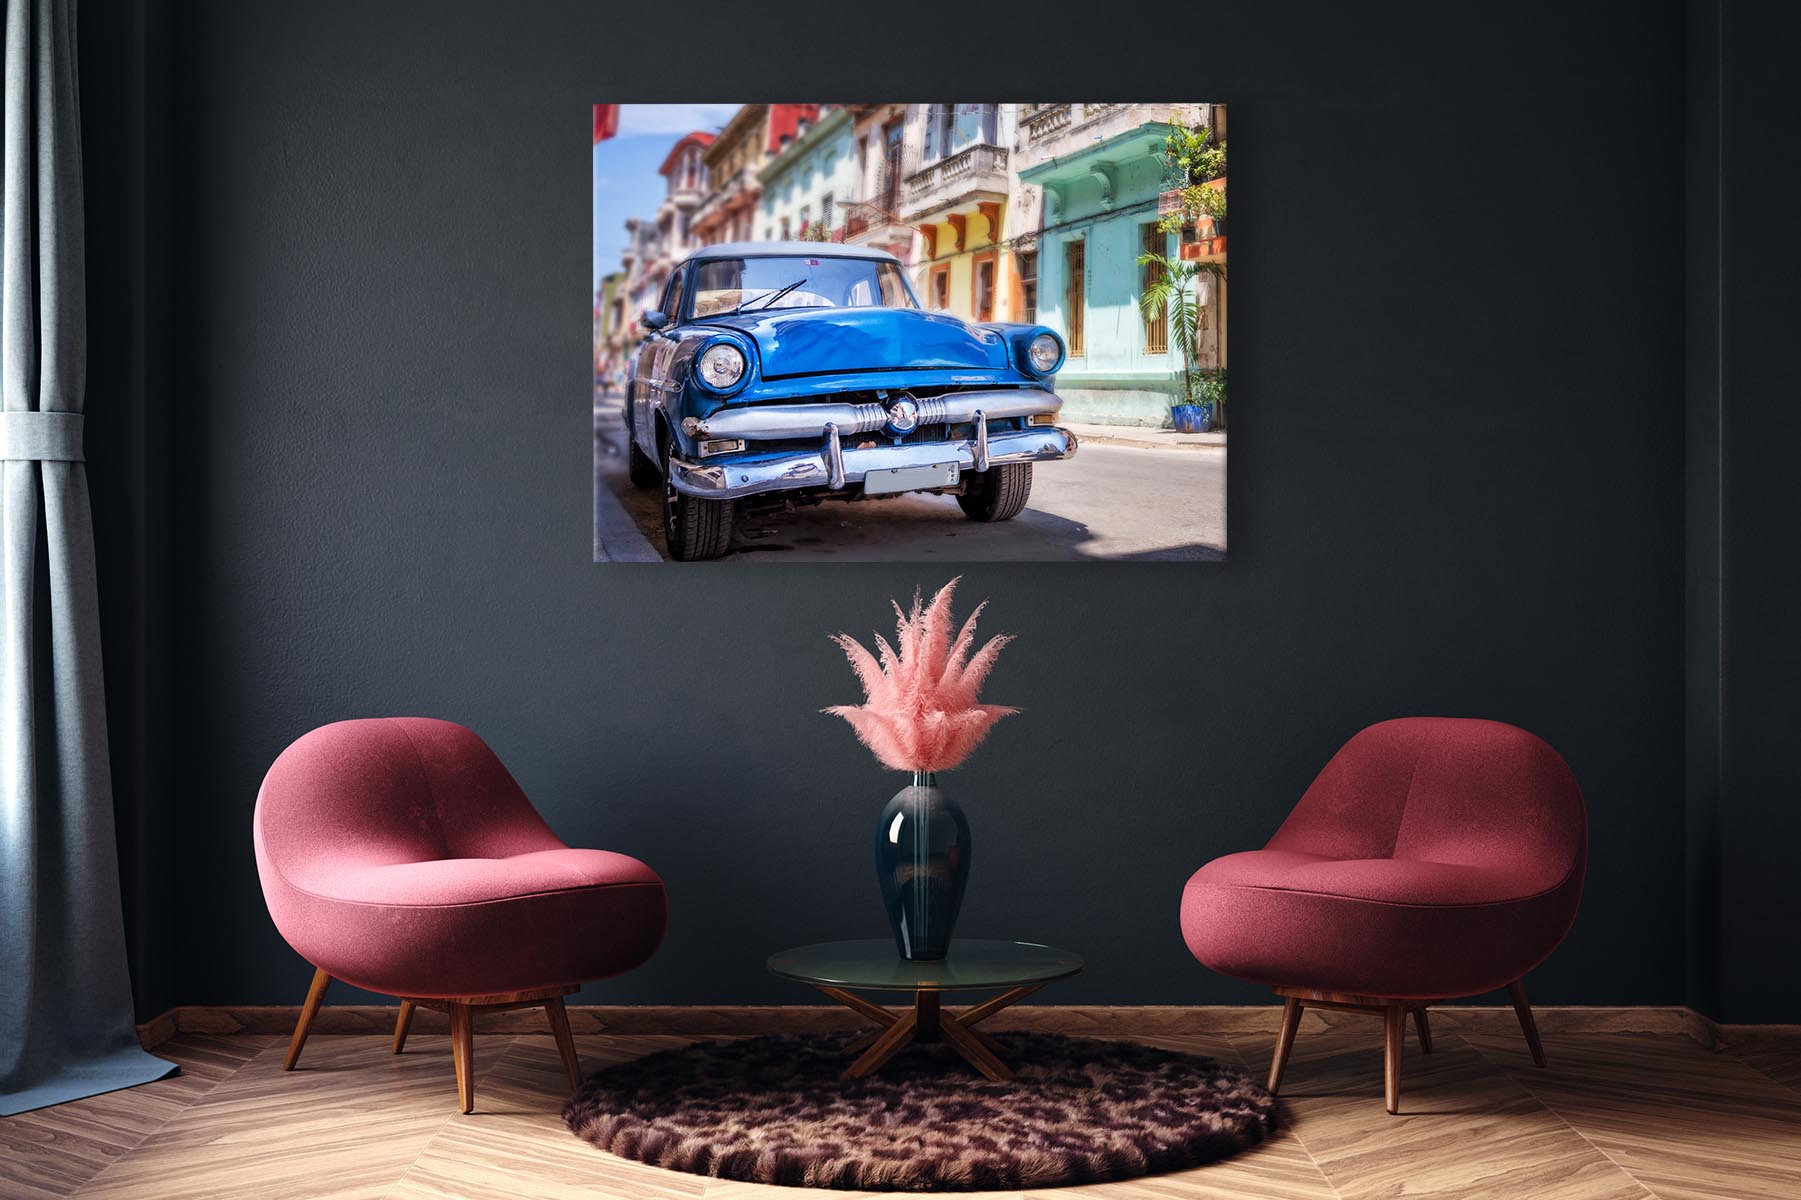 Wandbild Querformat Titel: Kuba Auto Oldtimer blau - Bild Wanddeko Alu Dibond Leinwand Acrylglas Holzbalken Butlerfinish Poster